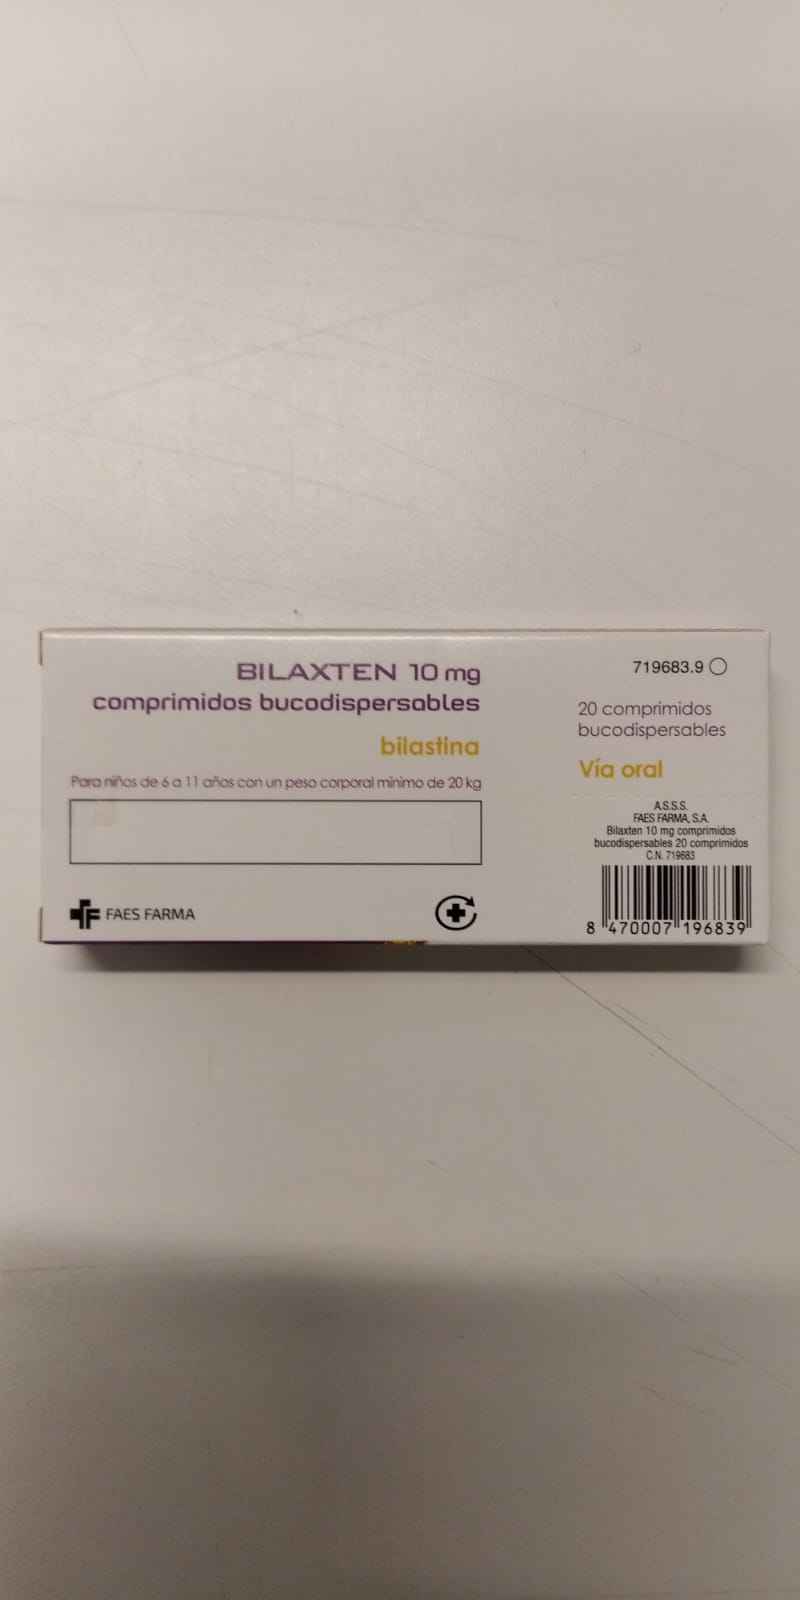 比拉斯汀口腔崩解片/ Bilastine Orally disintegrating Tablets/Opexa; Bilaxten; Antires; Bitosen